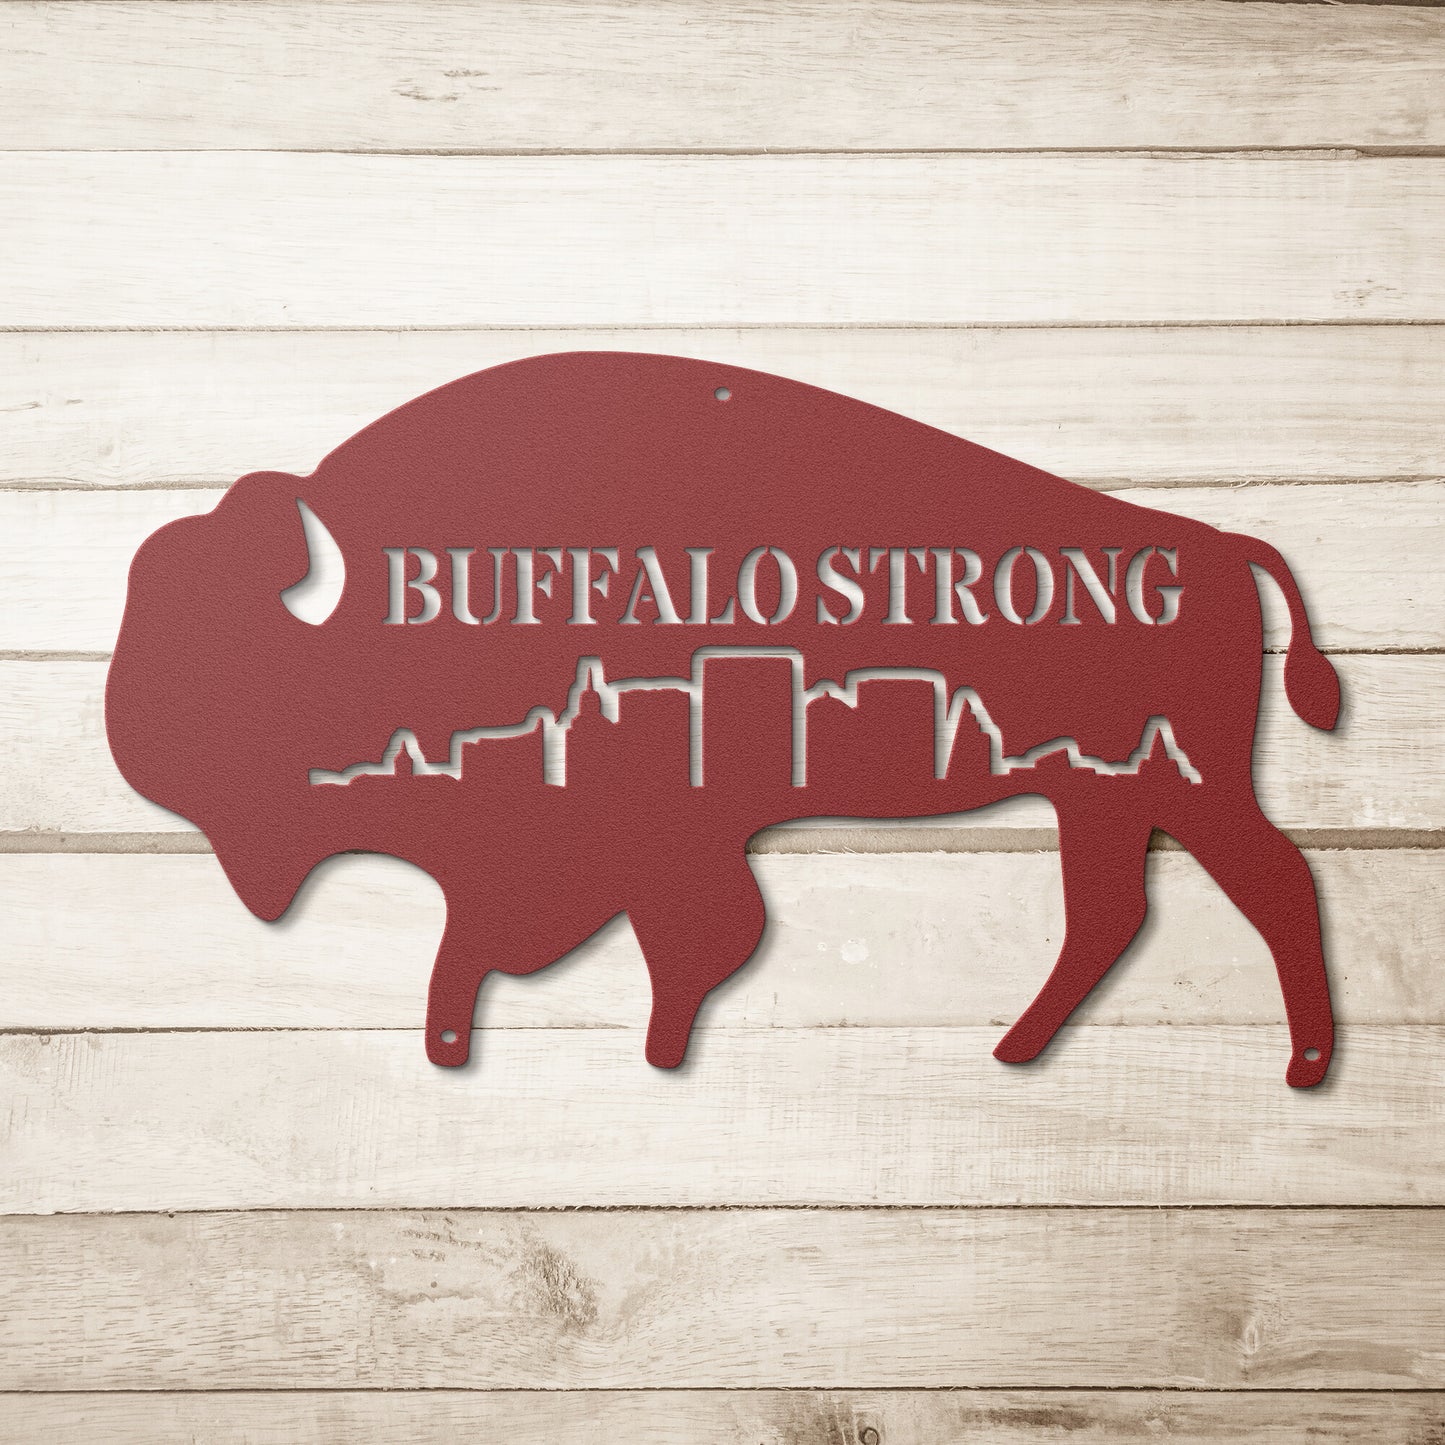 Buffalo Strong metal sign